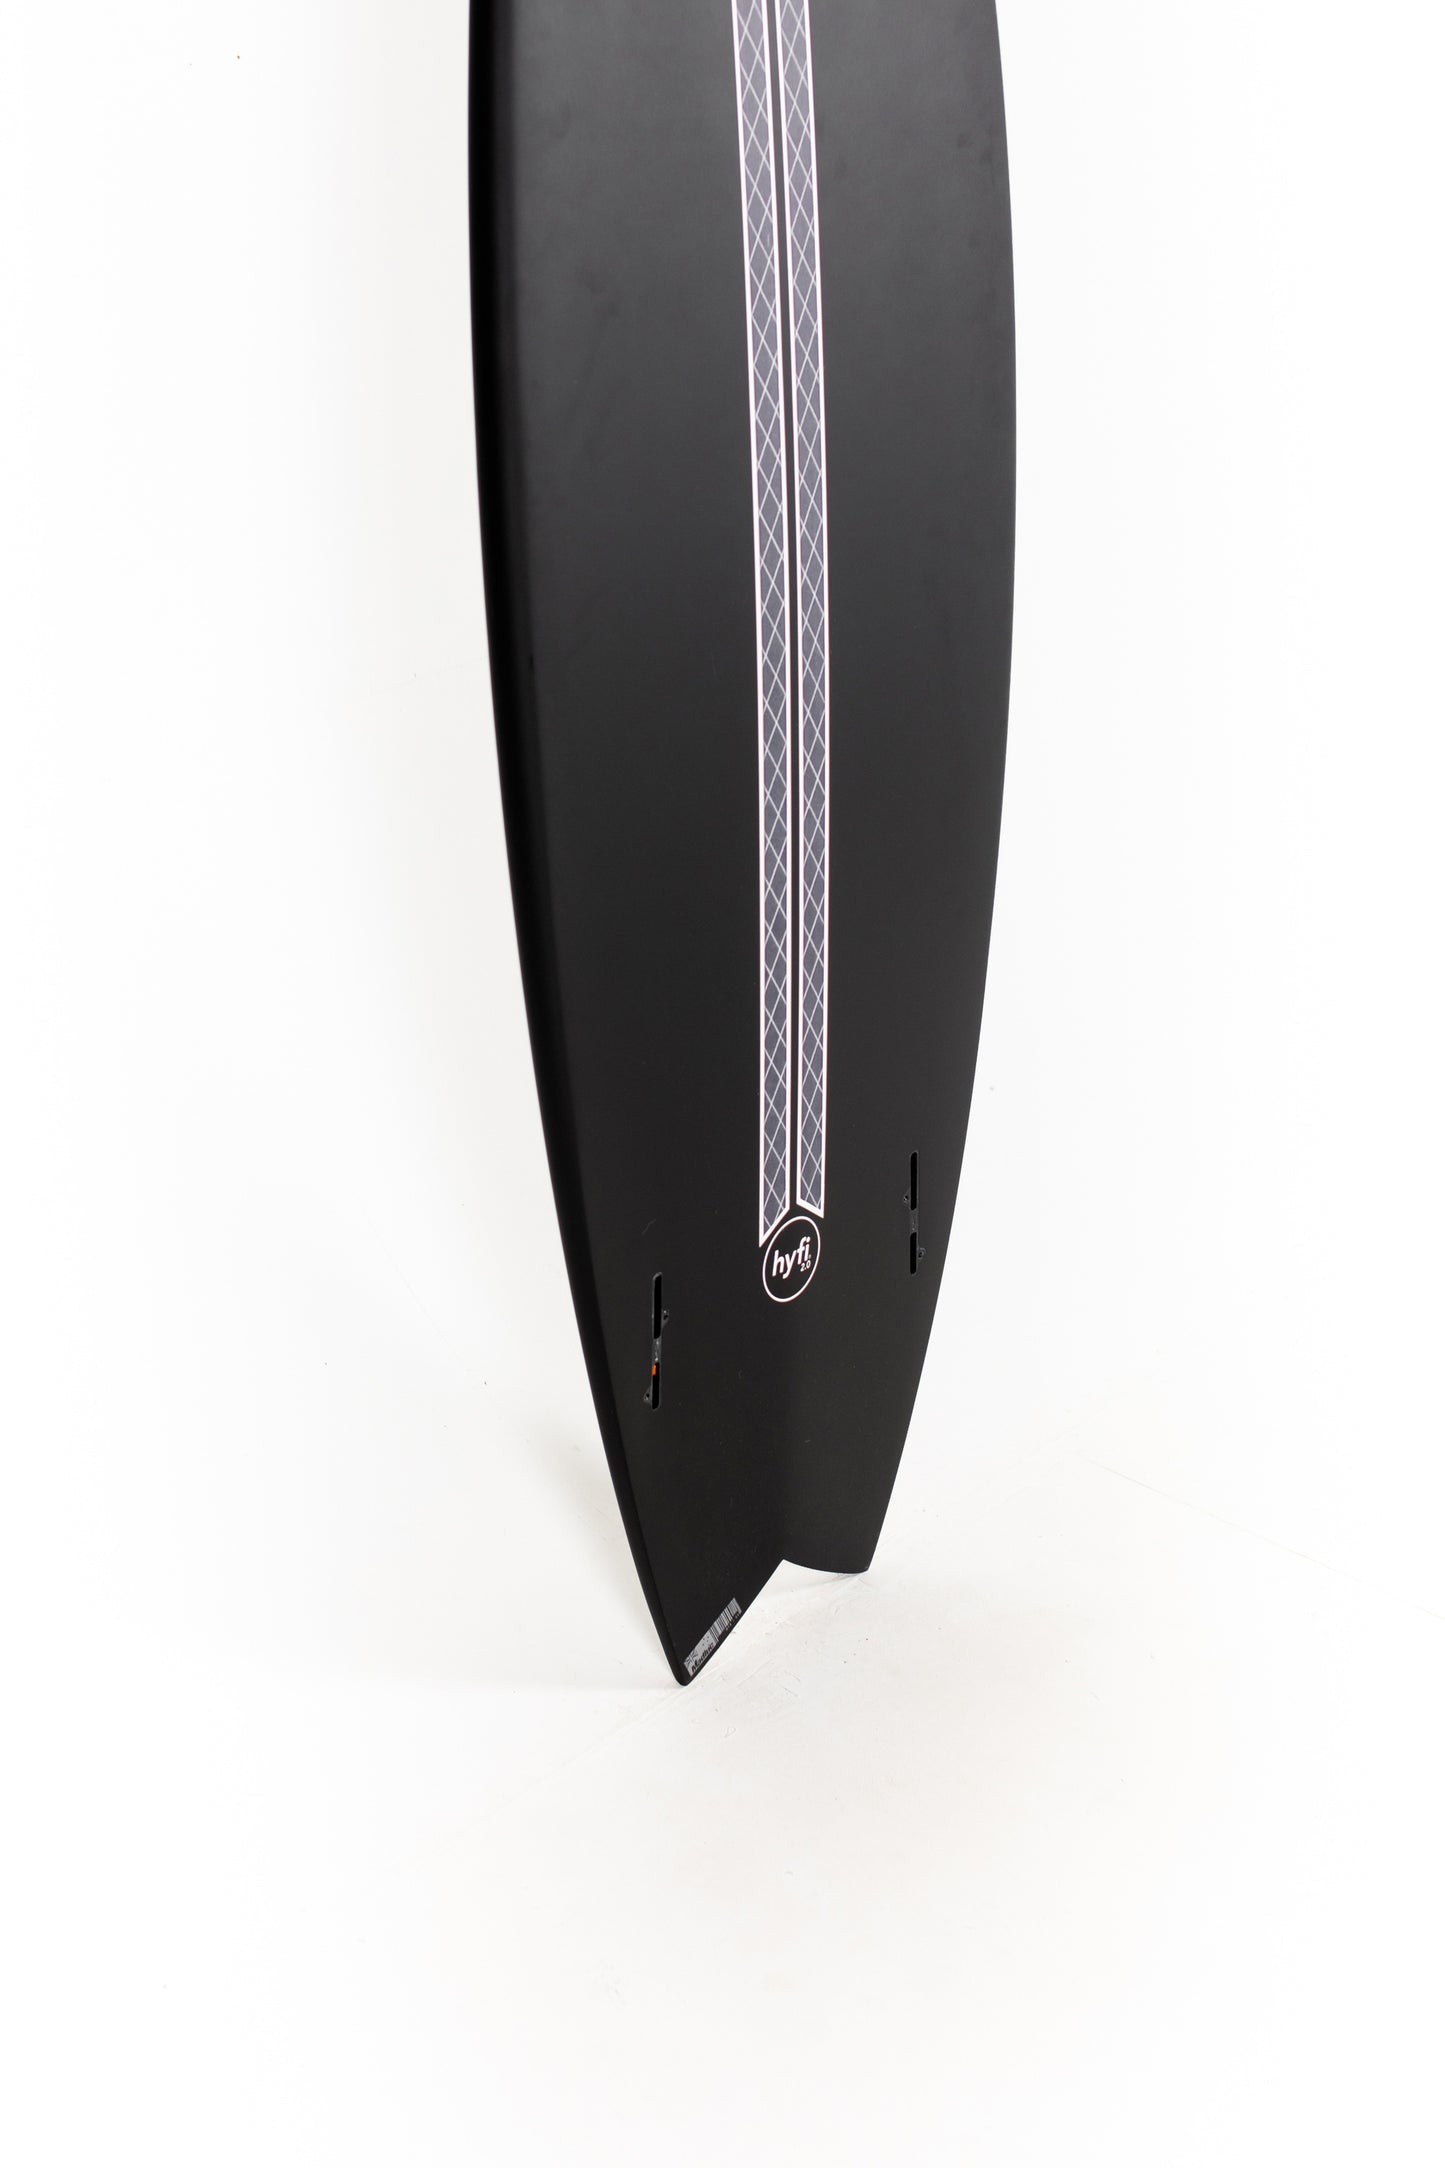 
                  
                    JS Surfboards - BLACK BARON HYFI 2.0 - 5'7" x 20 1/8 x 2 7/16 x 30,4L - BLACKBHYFI507
                  
                